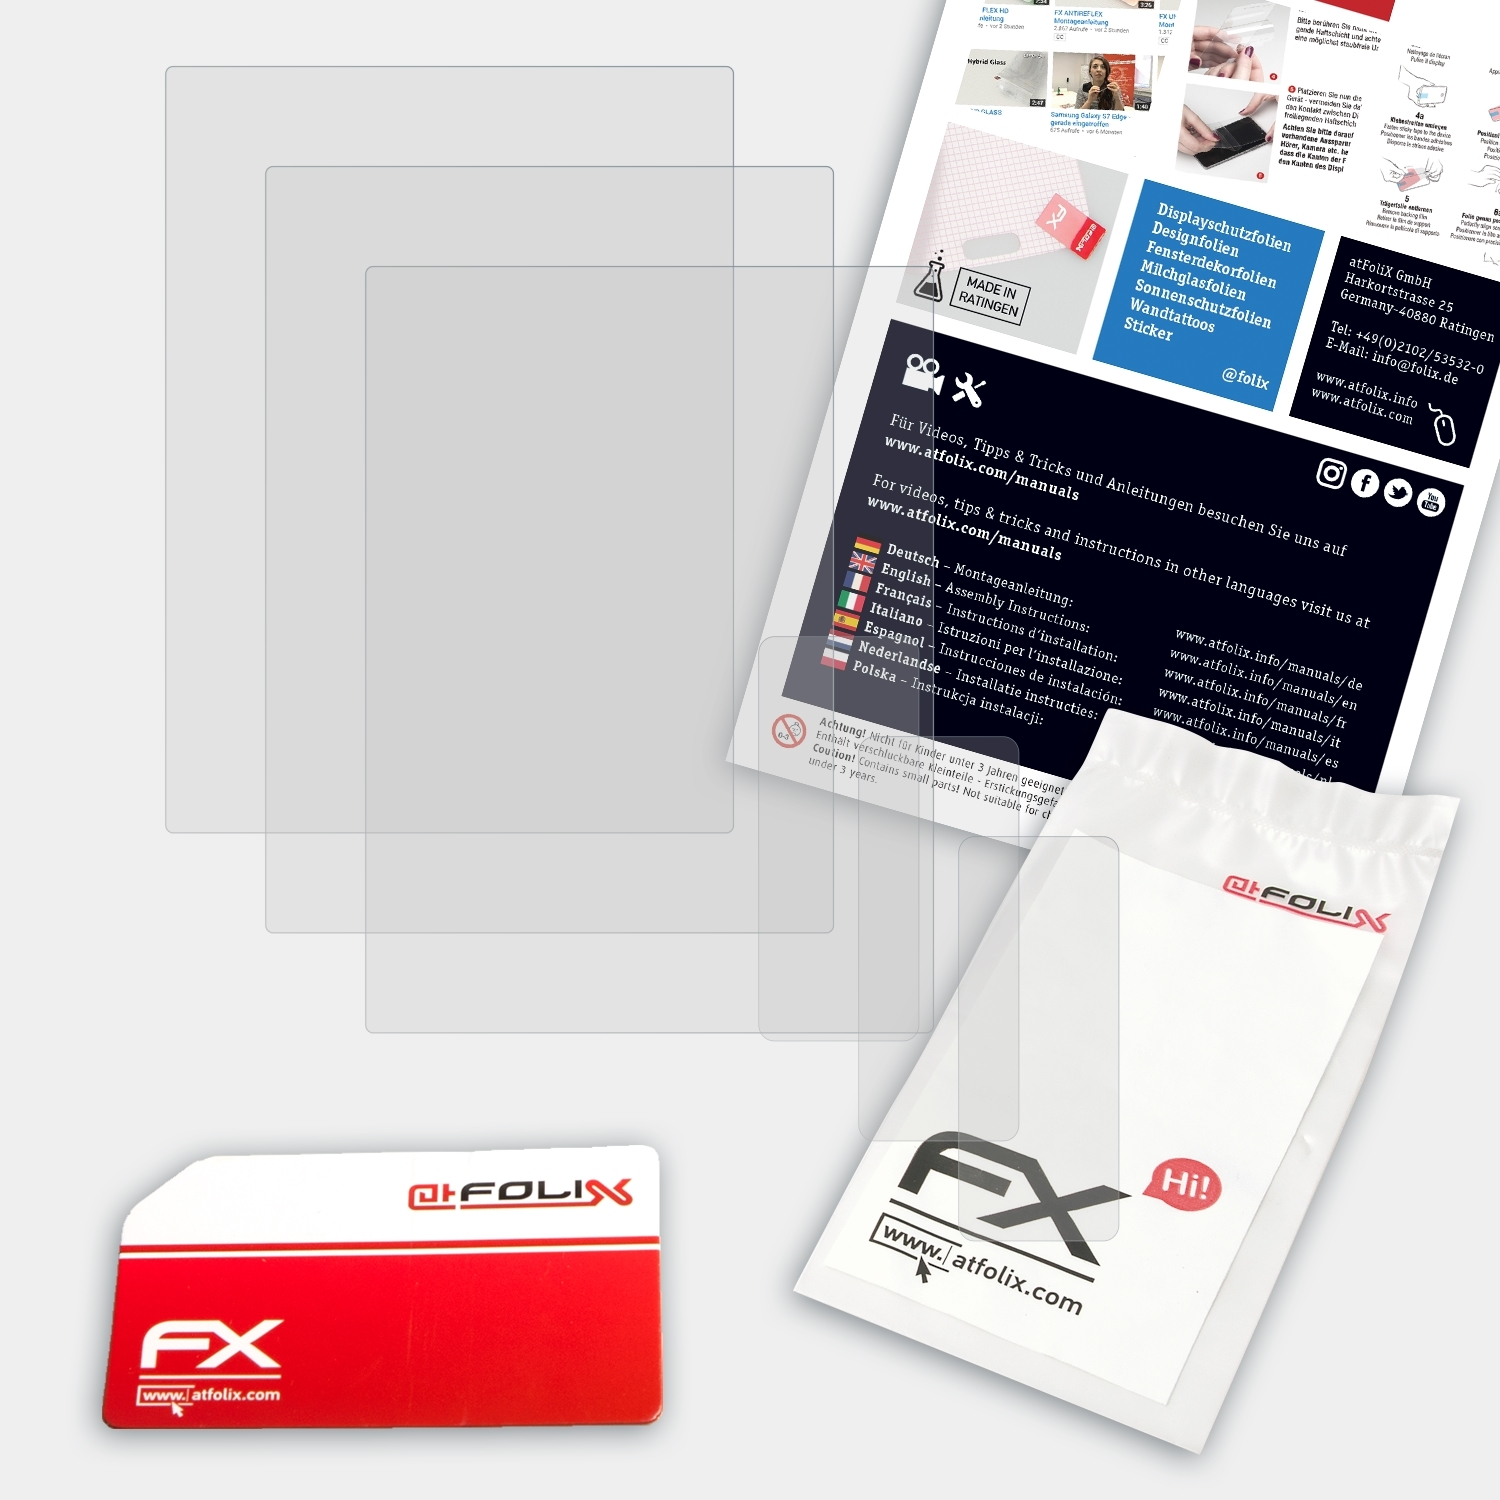 ATFOLIX Sony Displayschutz(für II) FX-Antireflex Alpha 3x a99